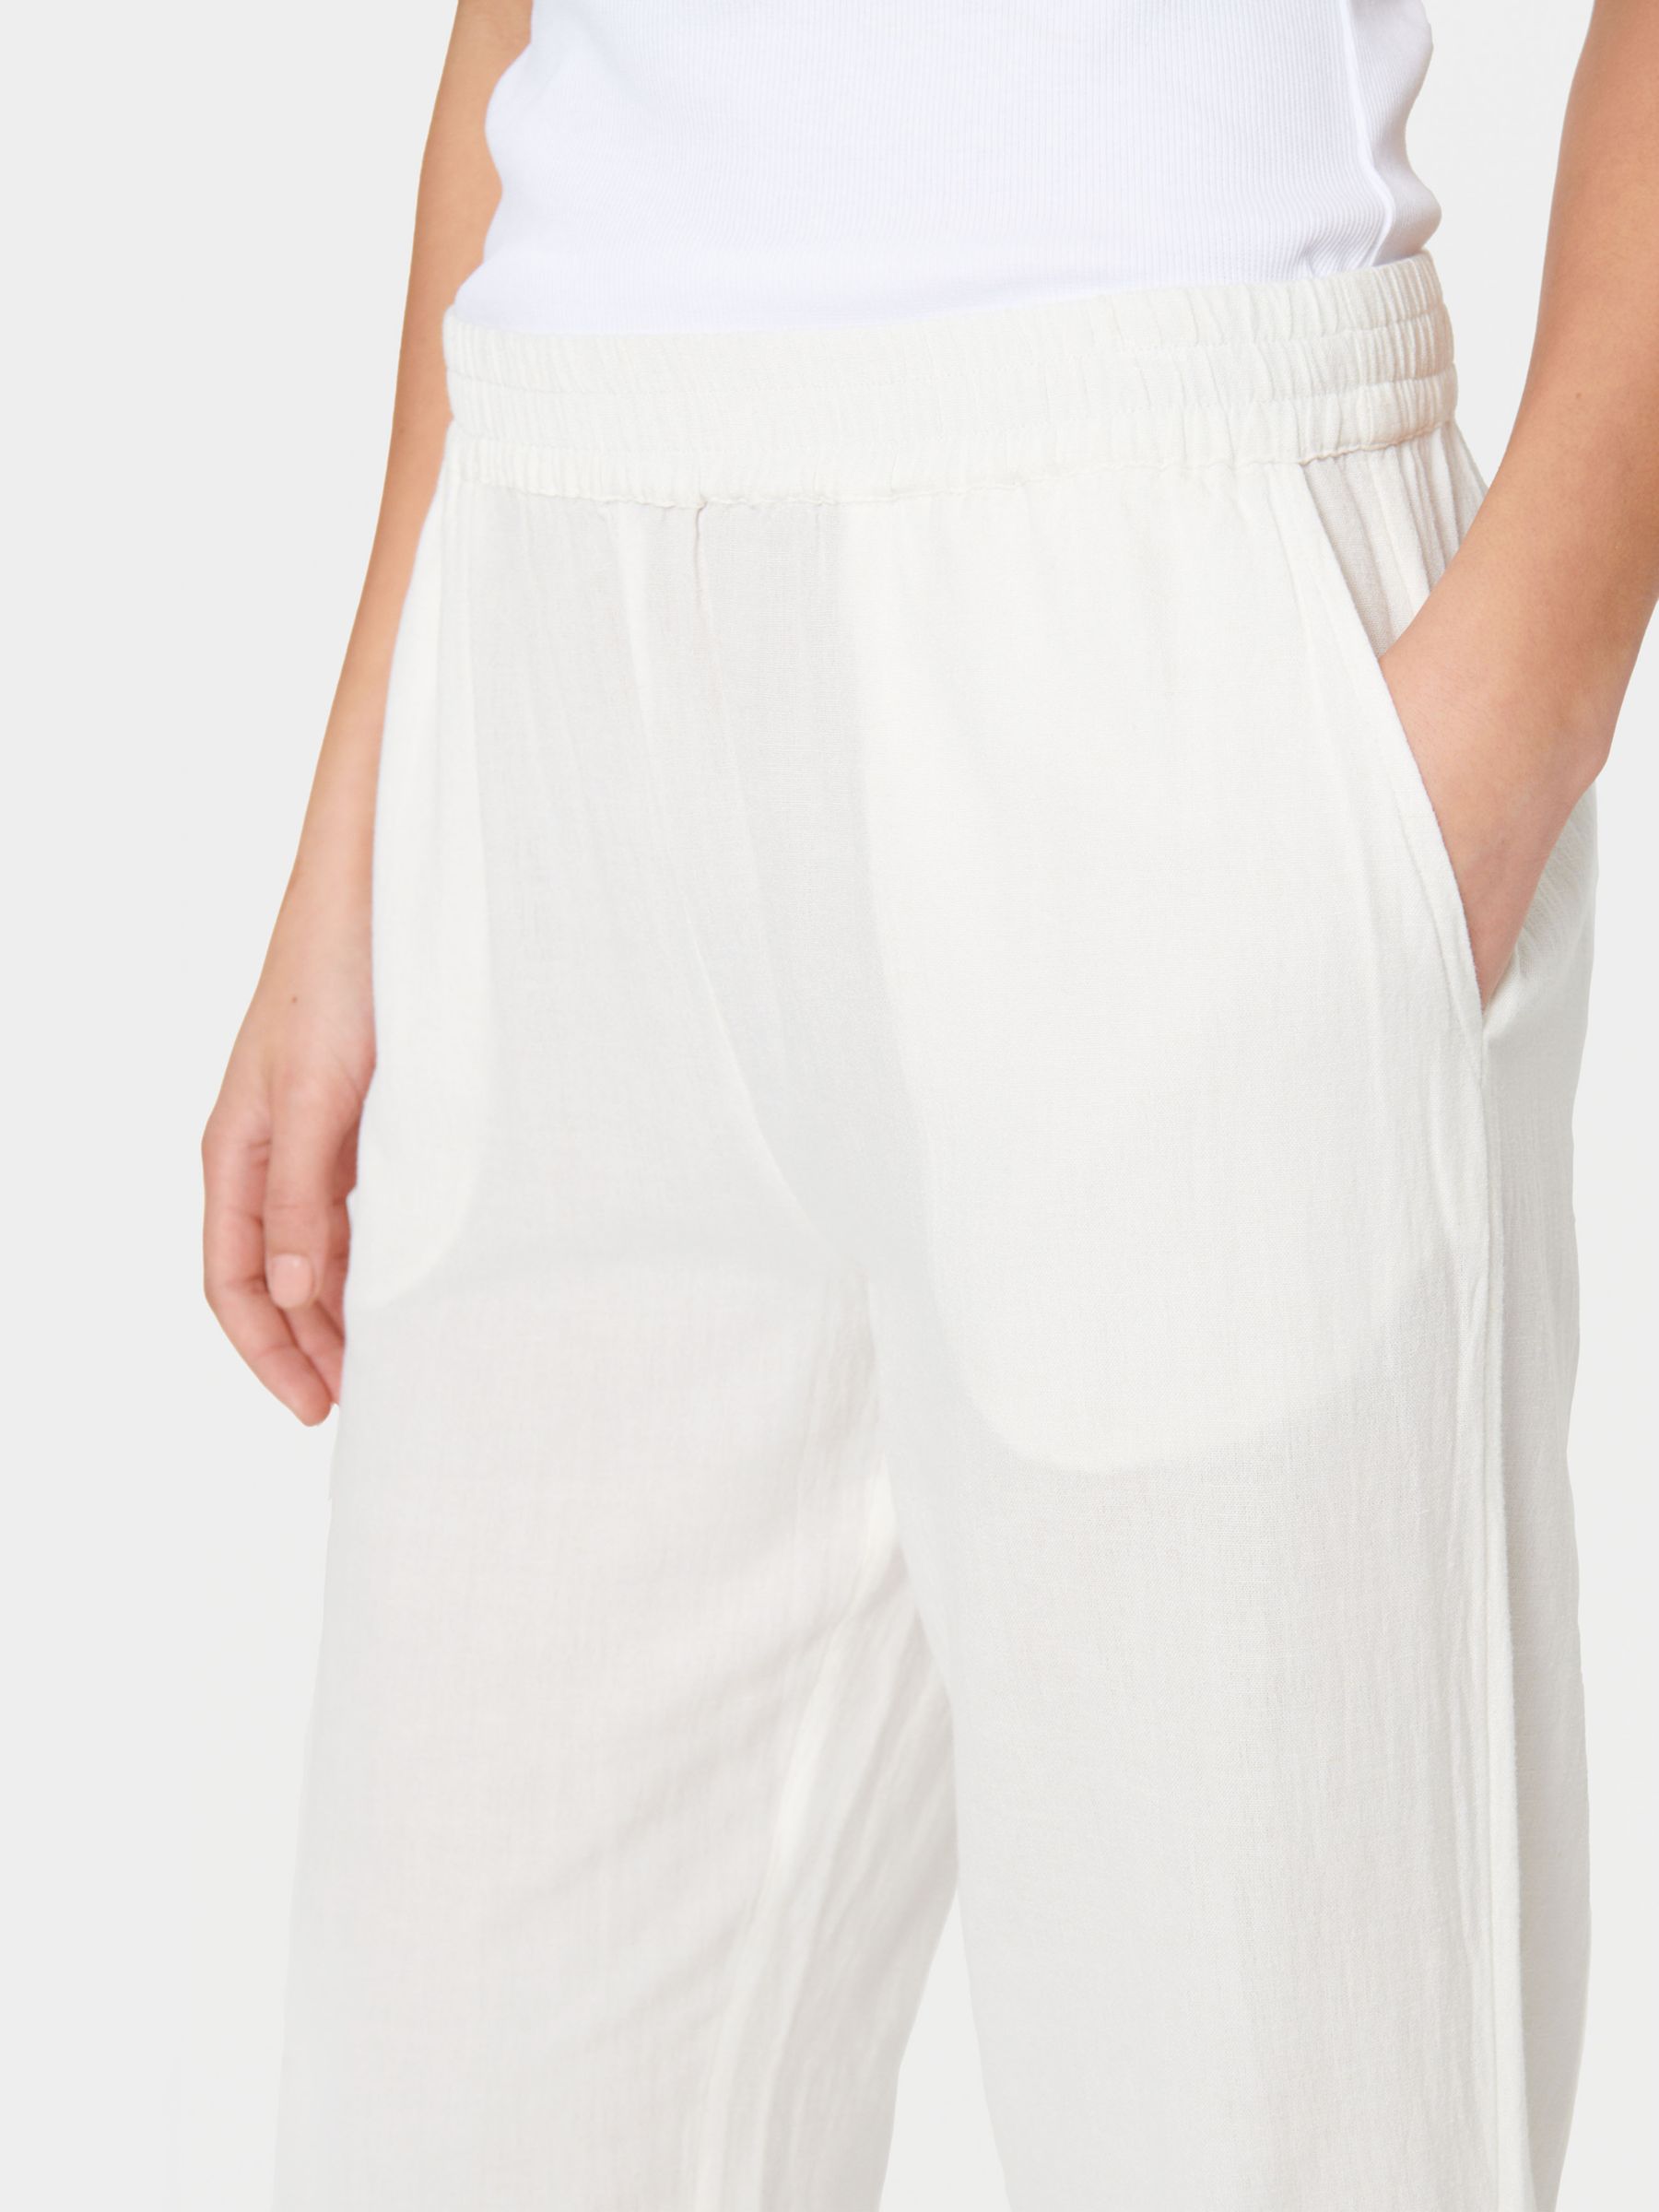 Buy Saint Tropez Ulina Linen Blend Trousers Online at johnlewis.com